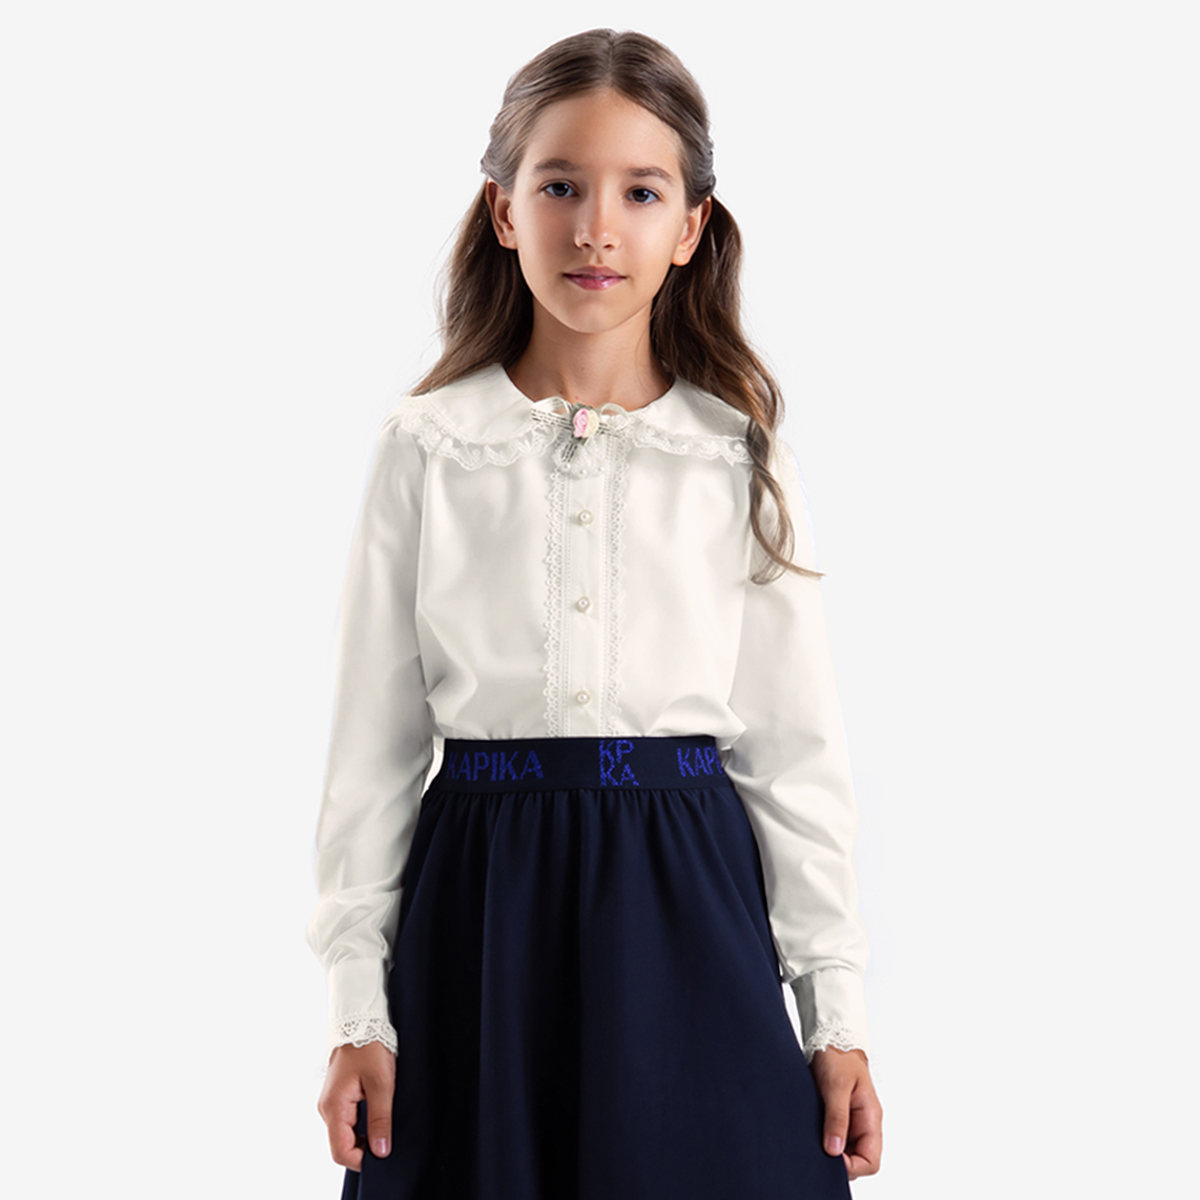 Блузка детская Kapika IJGCB01-02, цвет экрю, размер 158 блузка женская вилена размер 48